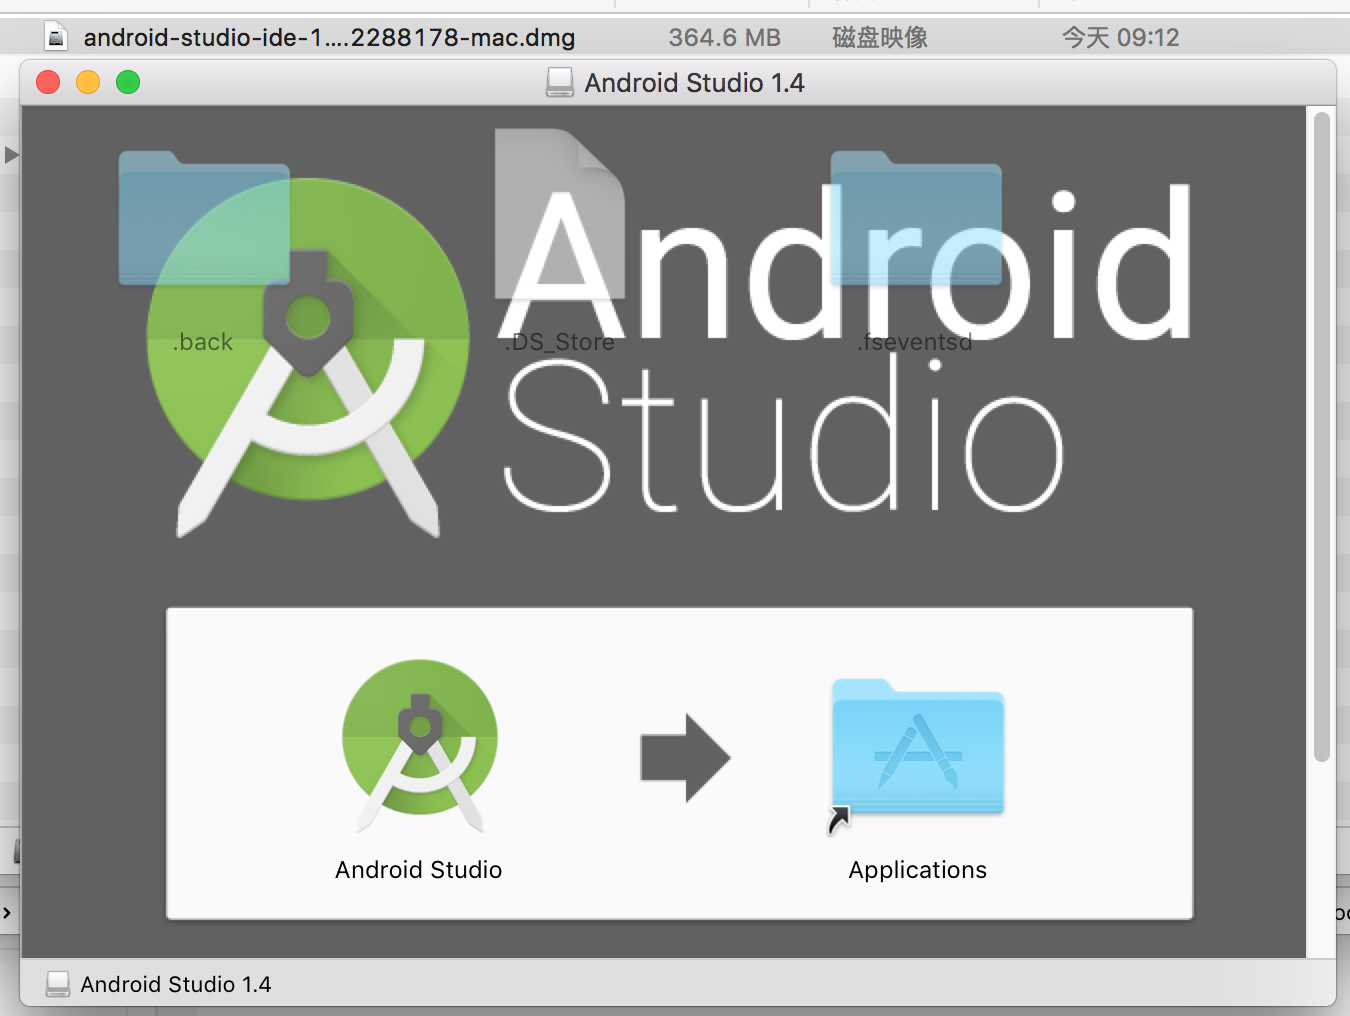 install android-studio-ide-141.2288178-mac dmg